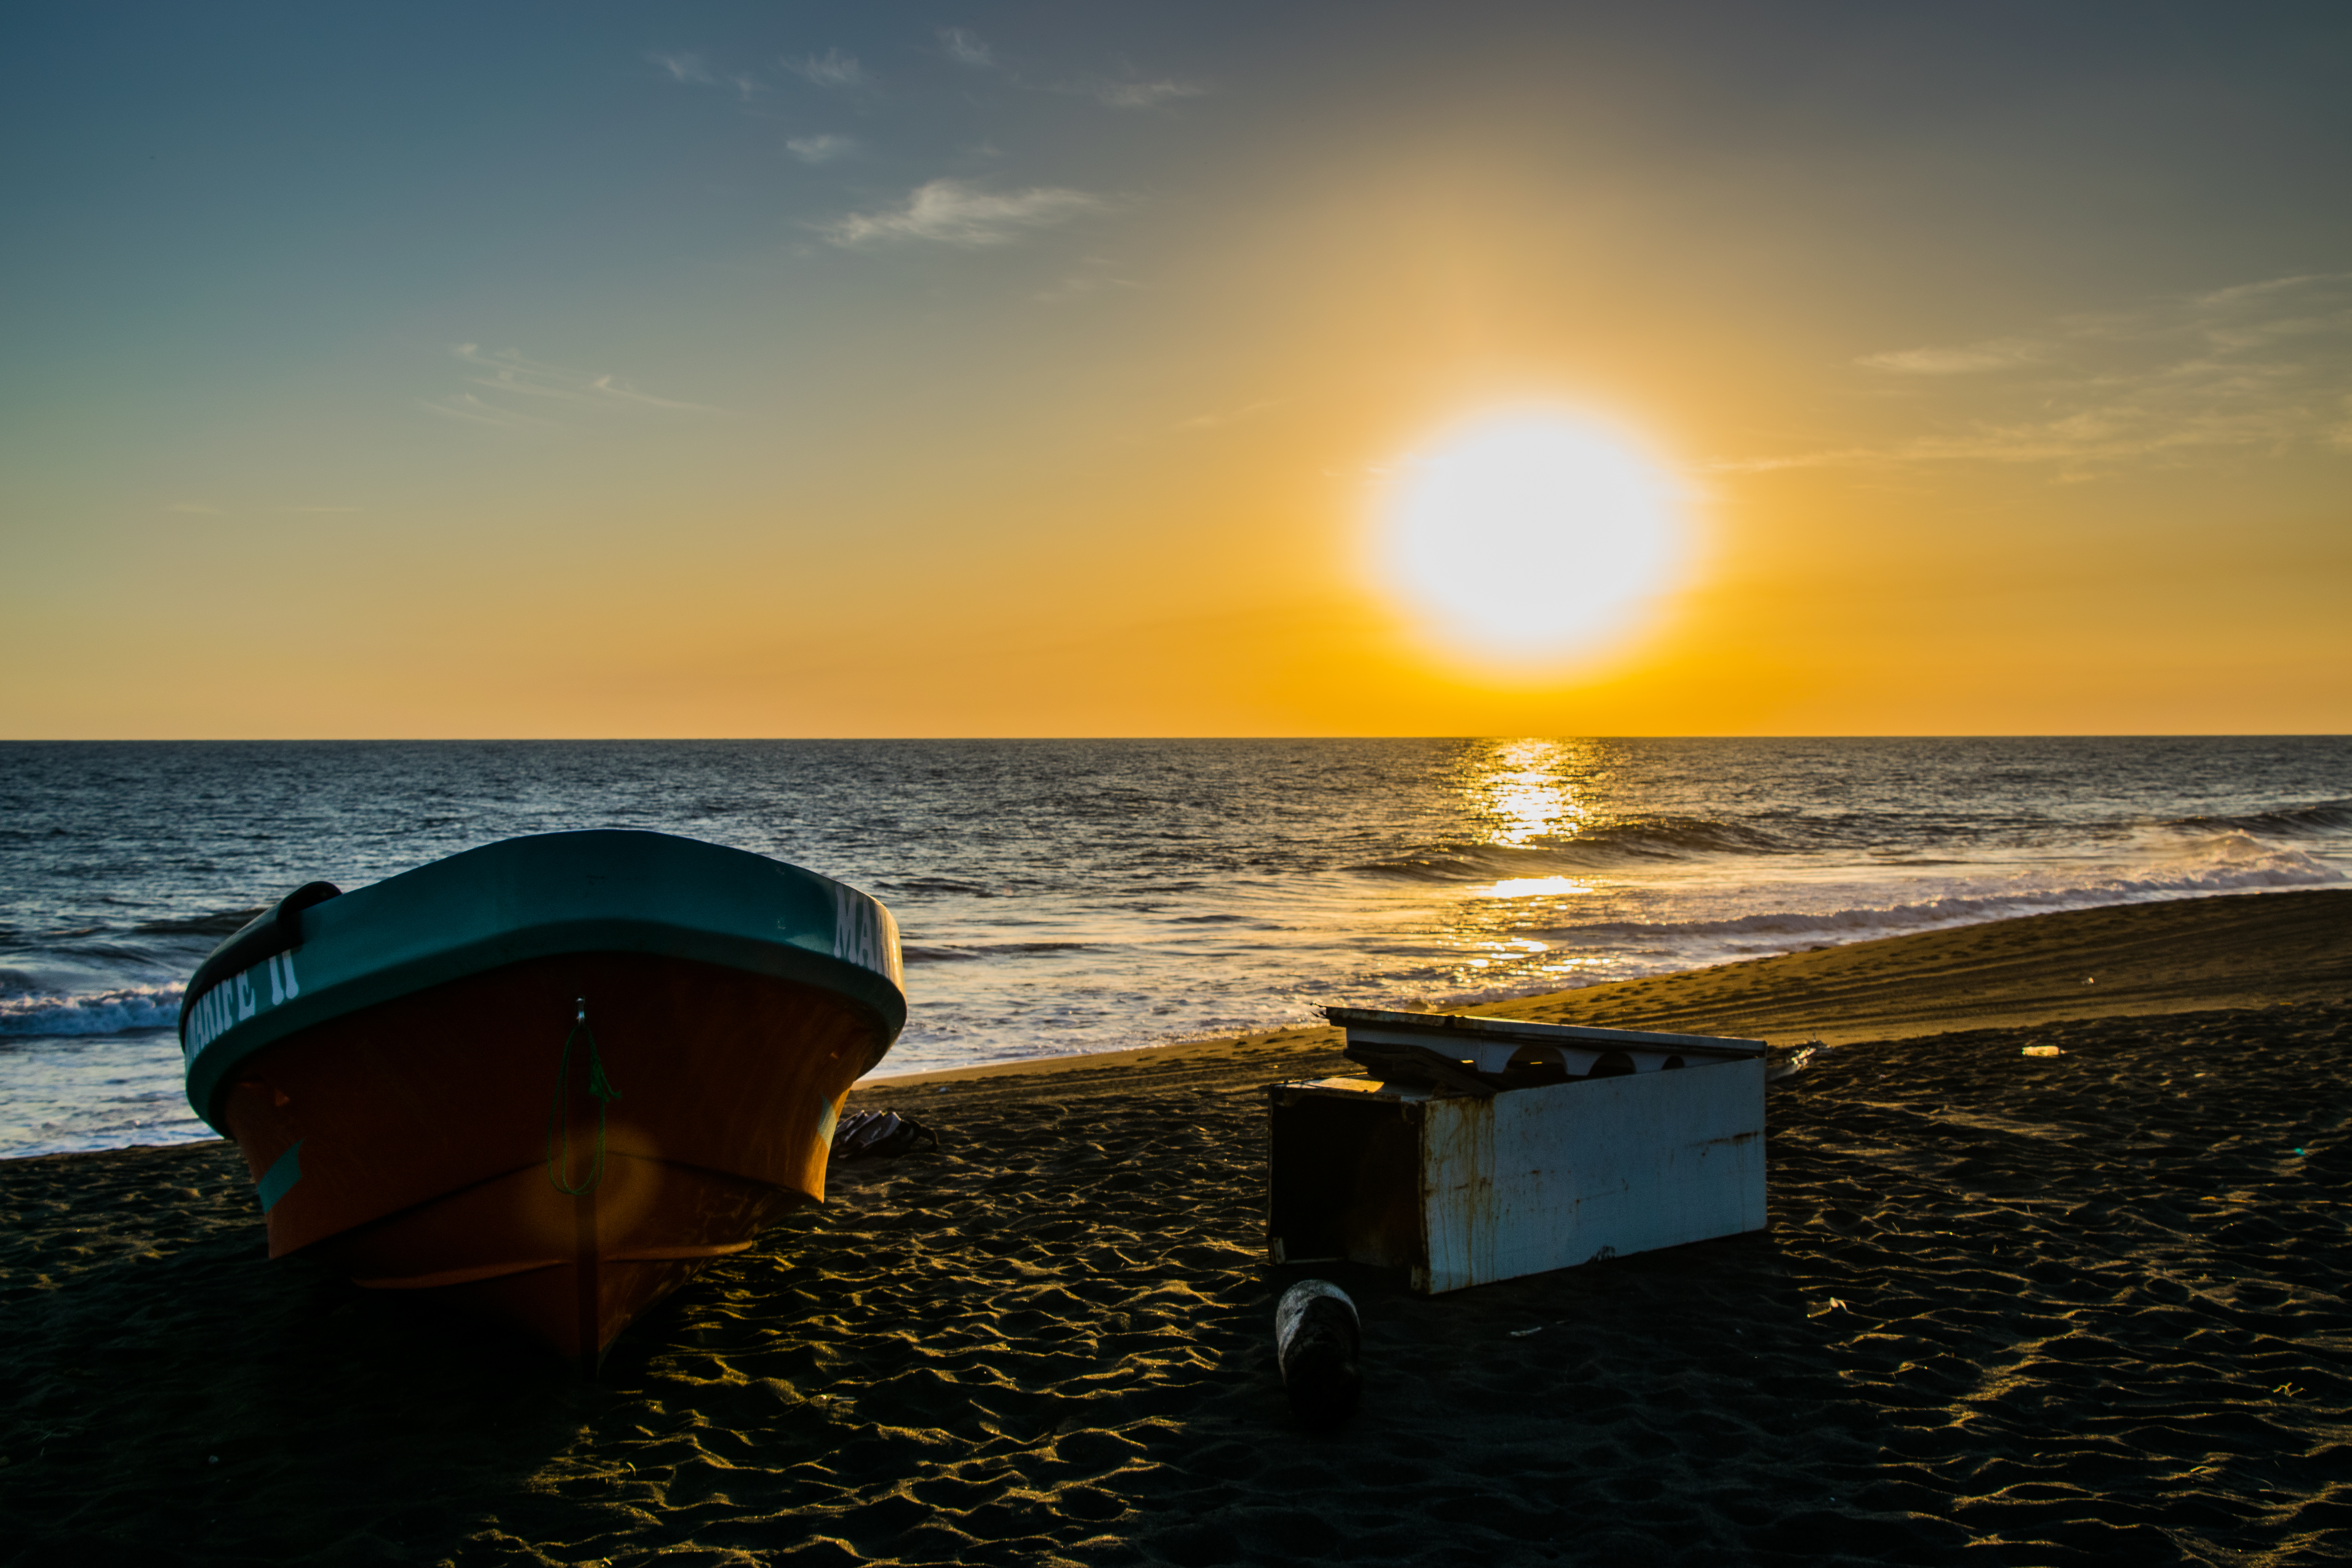 Guatemala Beach at Sunset - Free Stock Photo - Easy Download